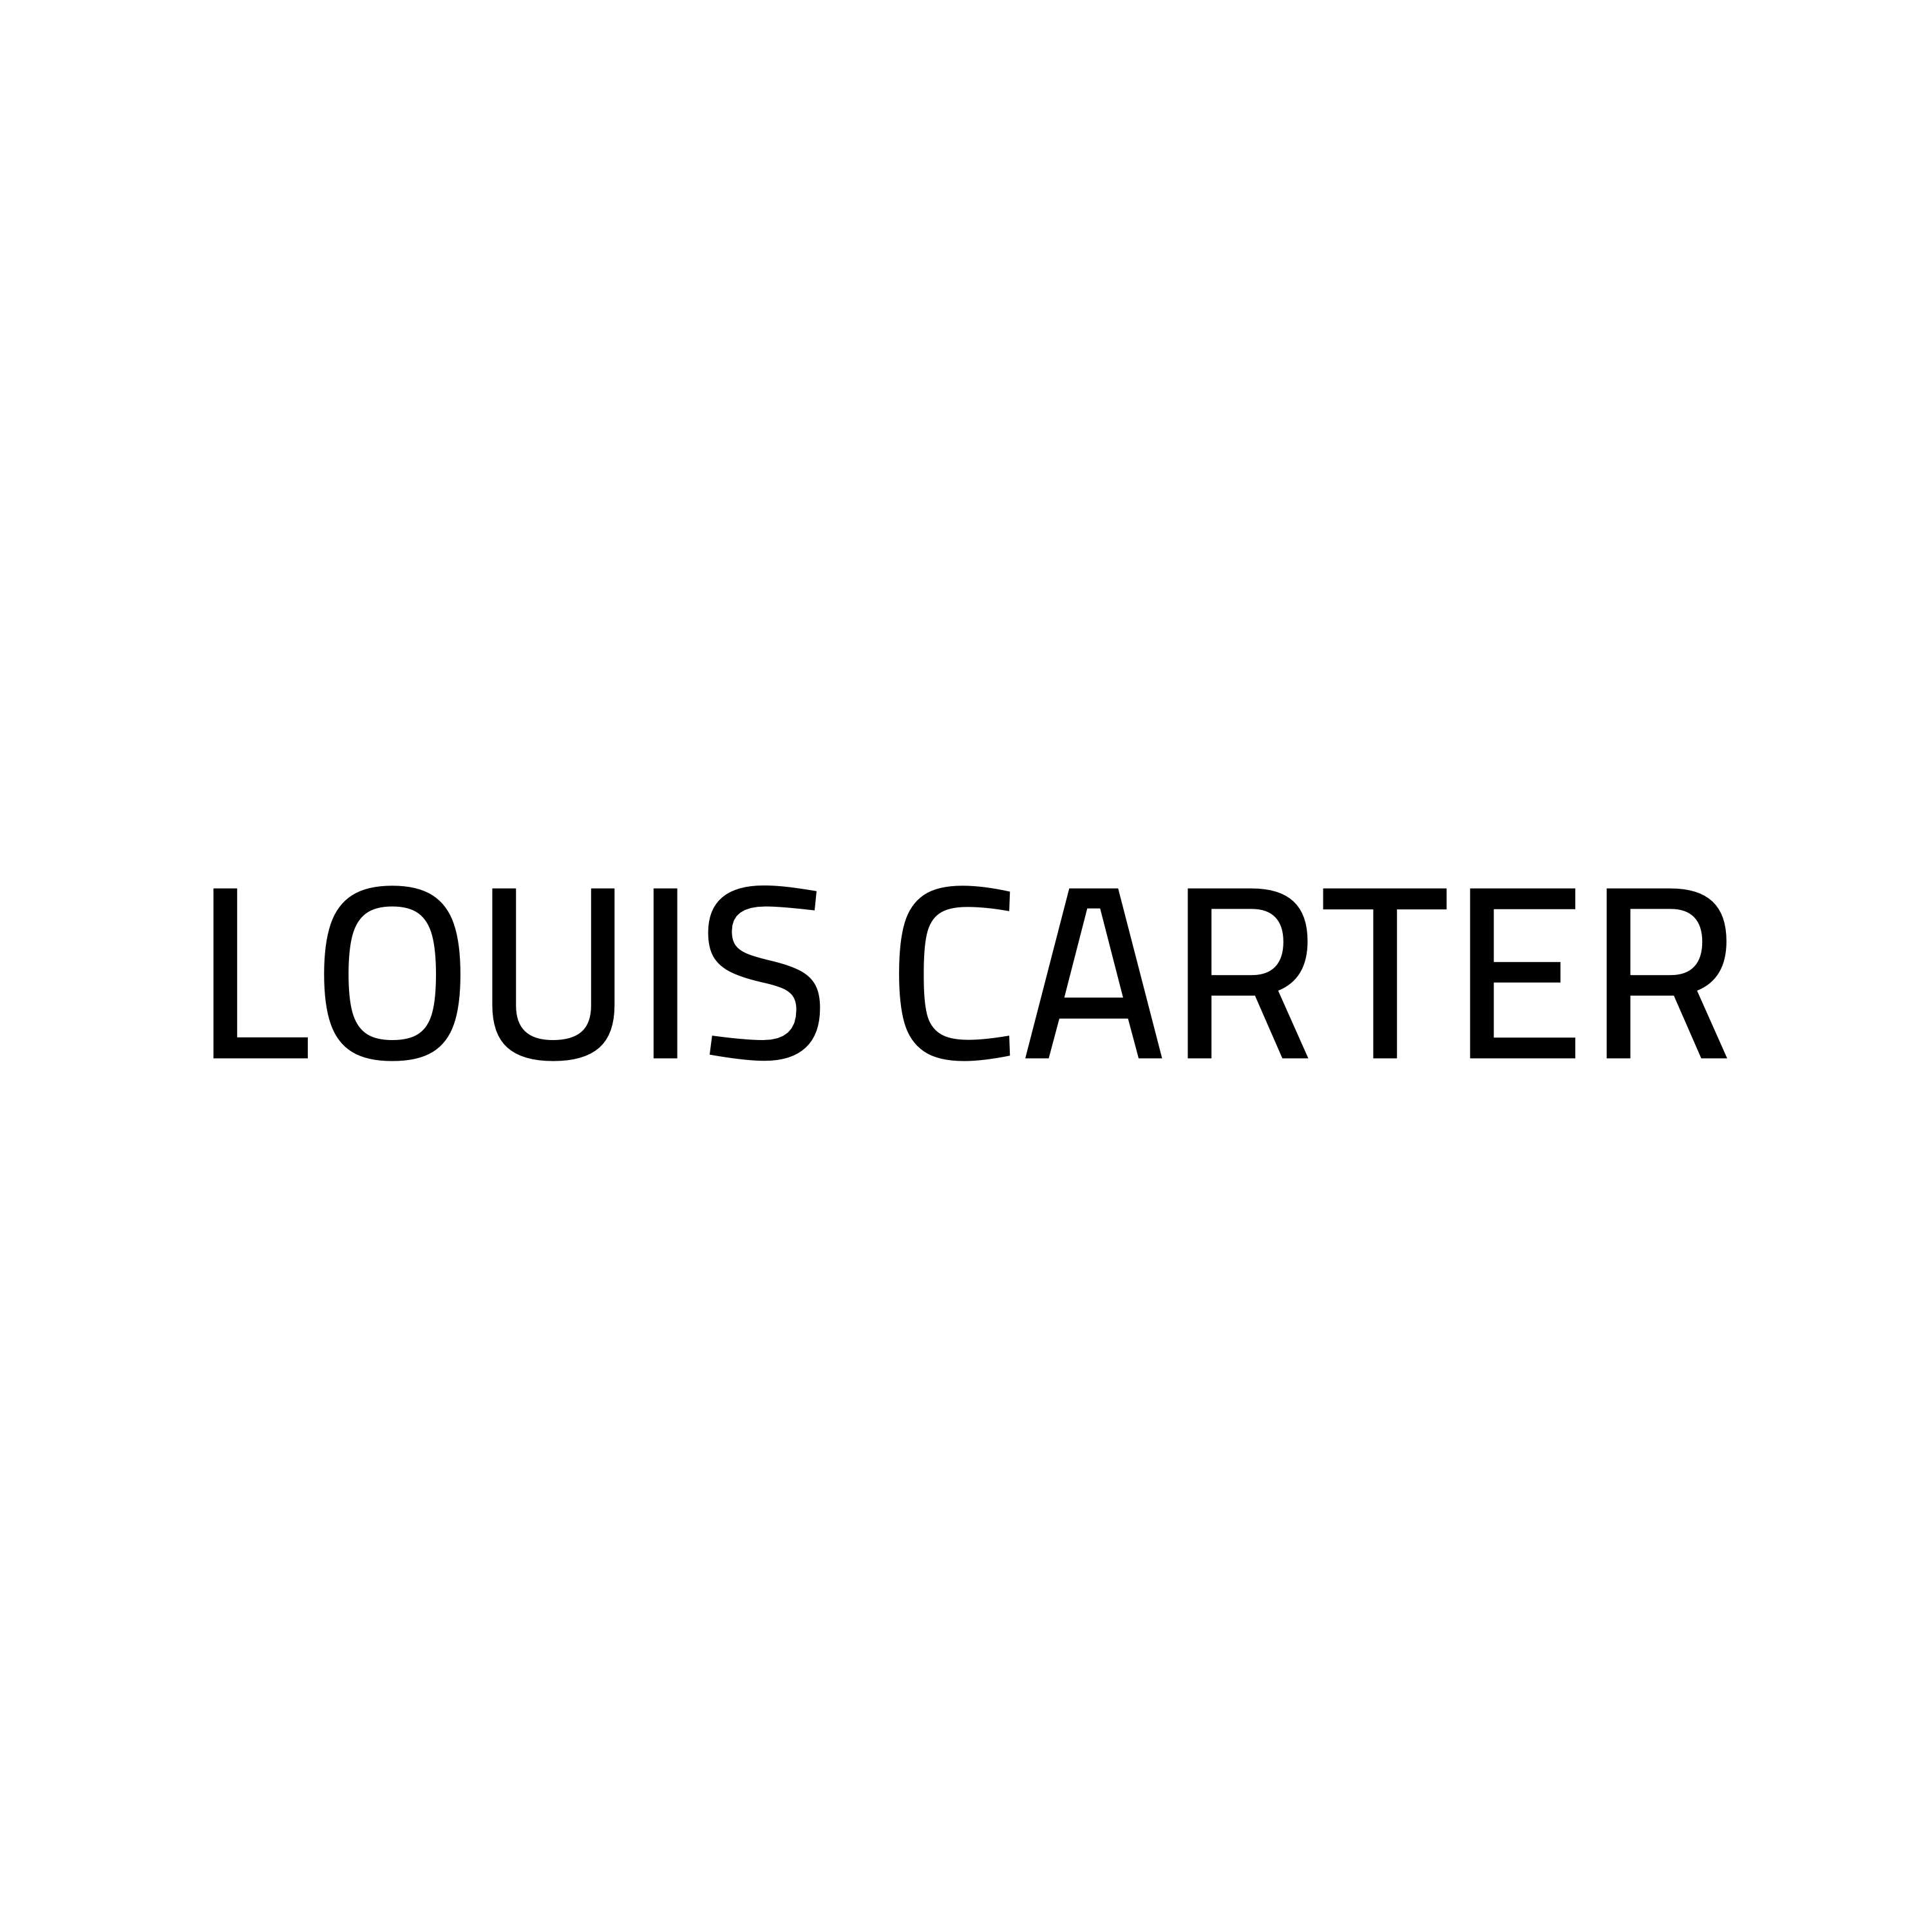 LOUIS CARTER